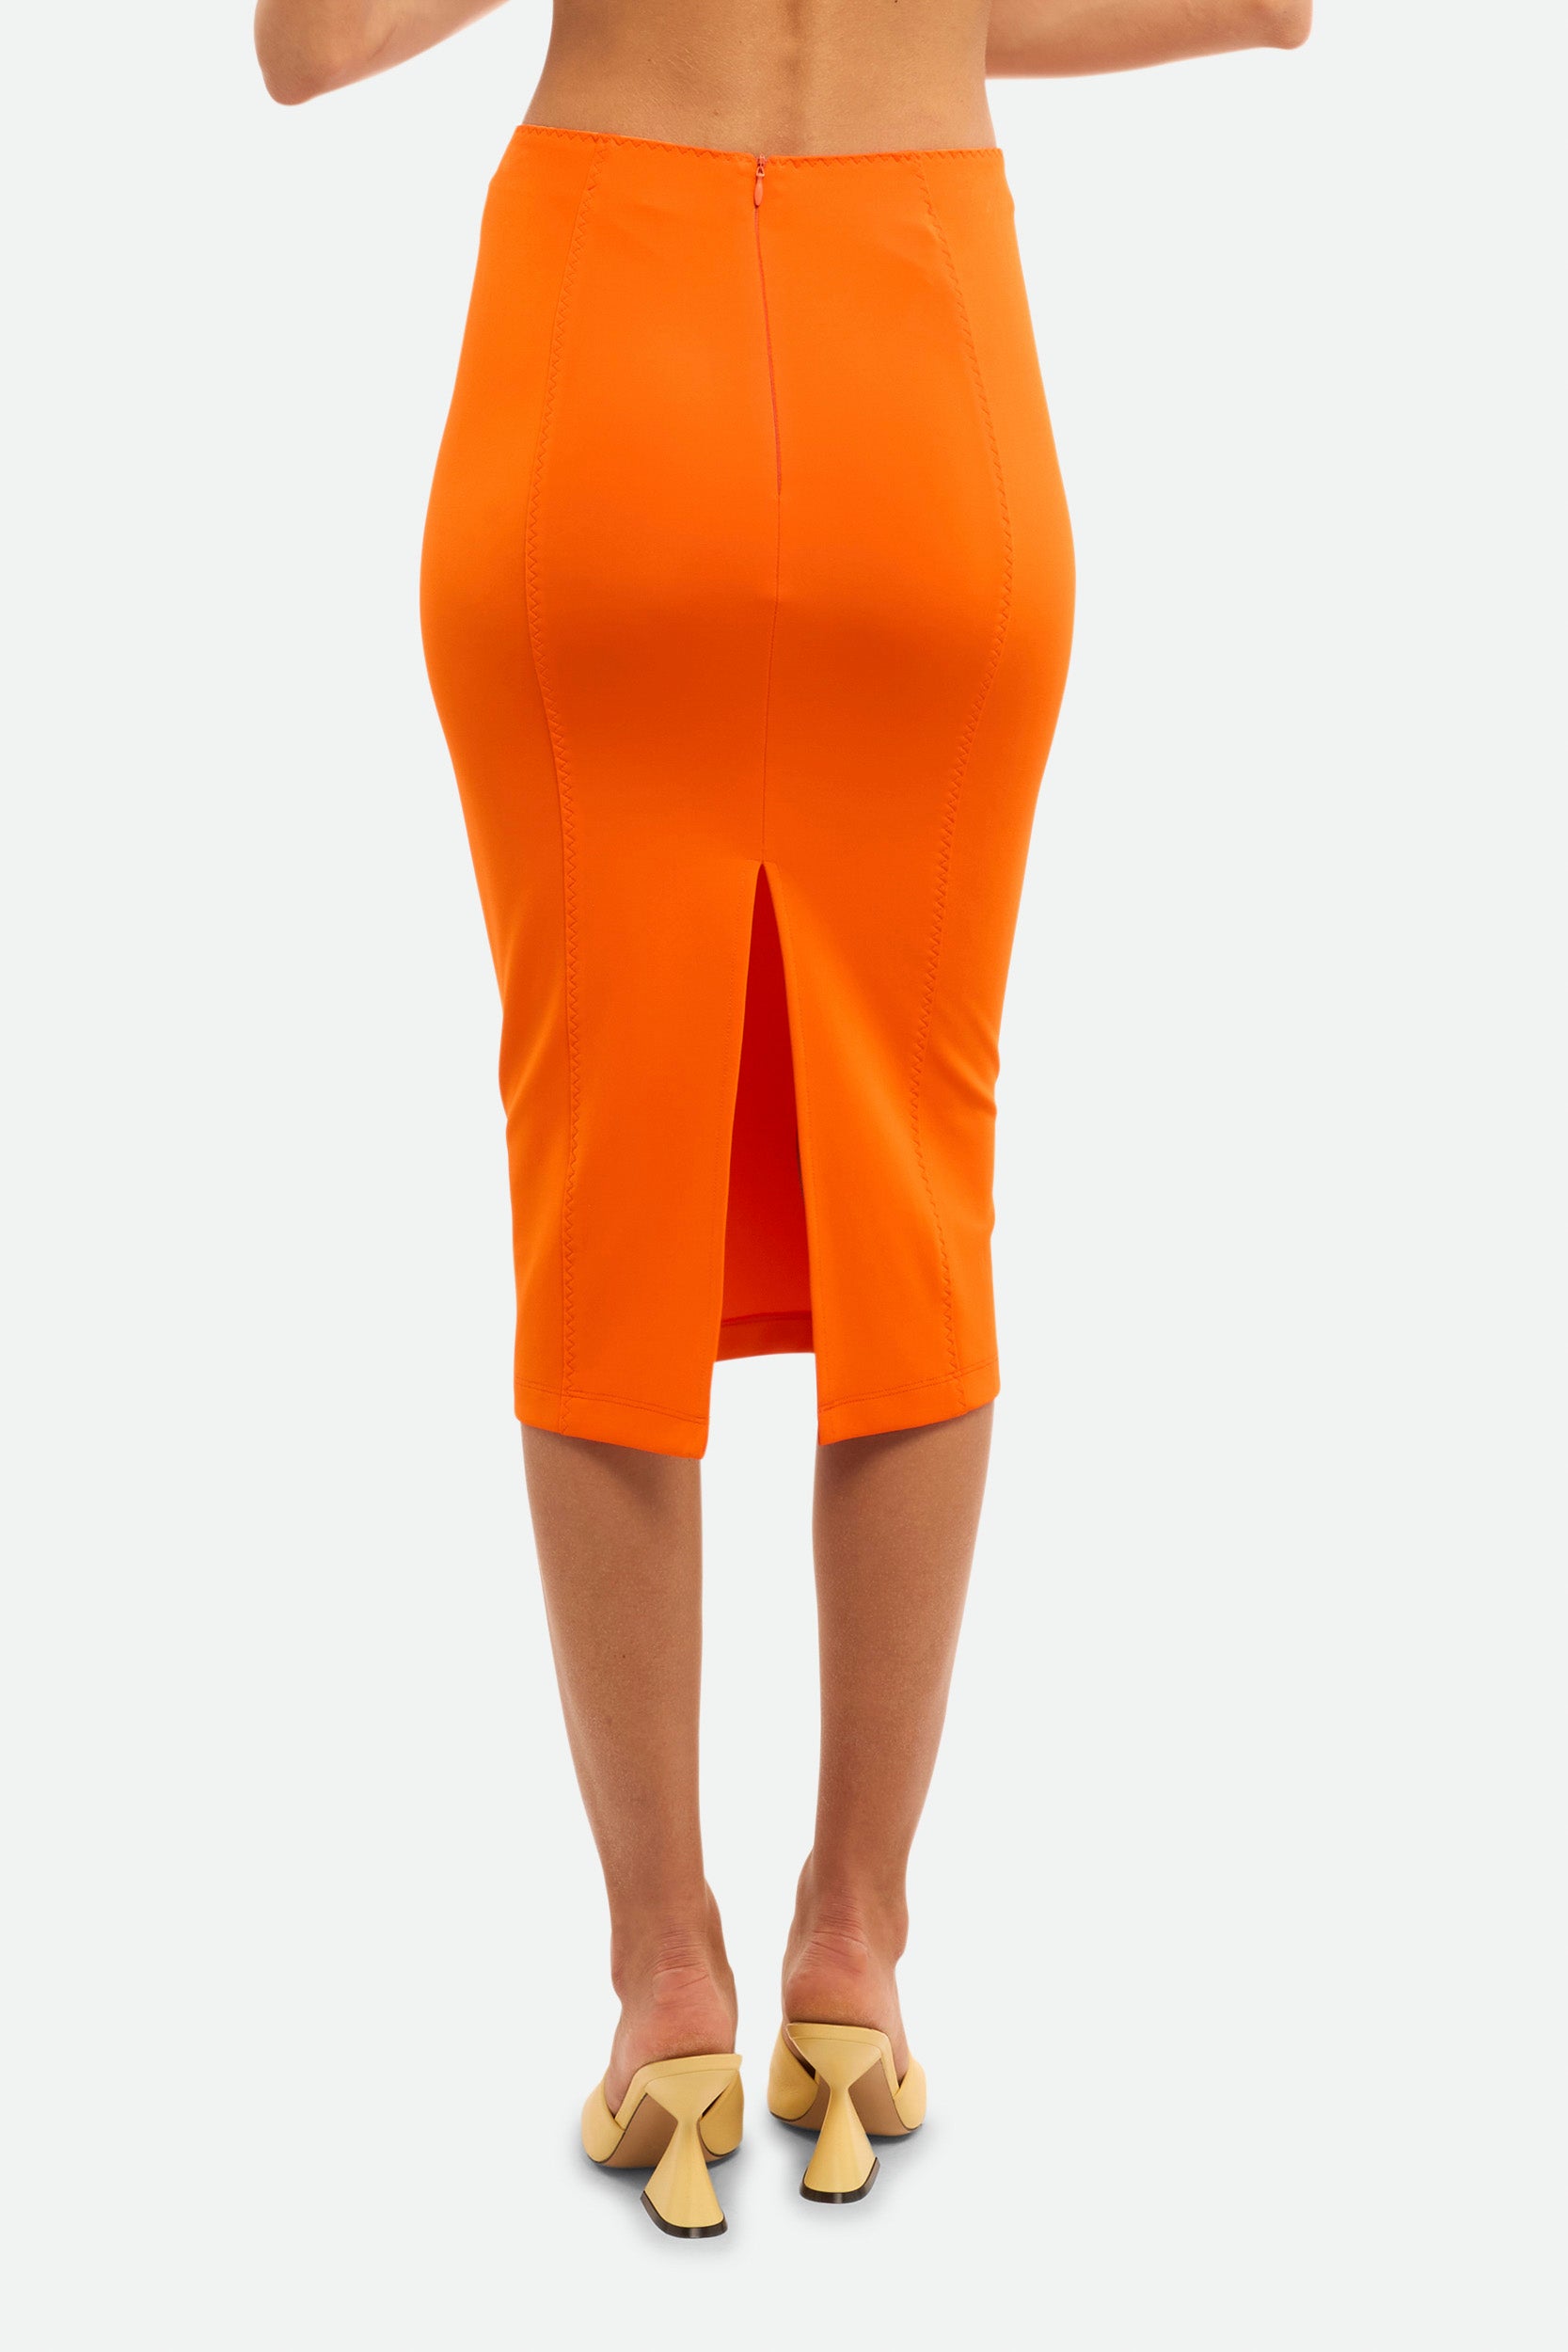 Pinko Orange Pencil Skirt